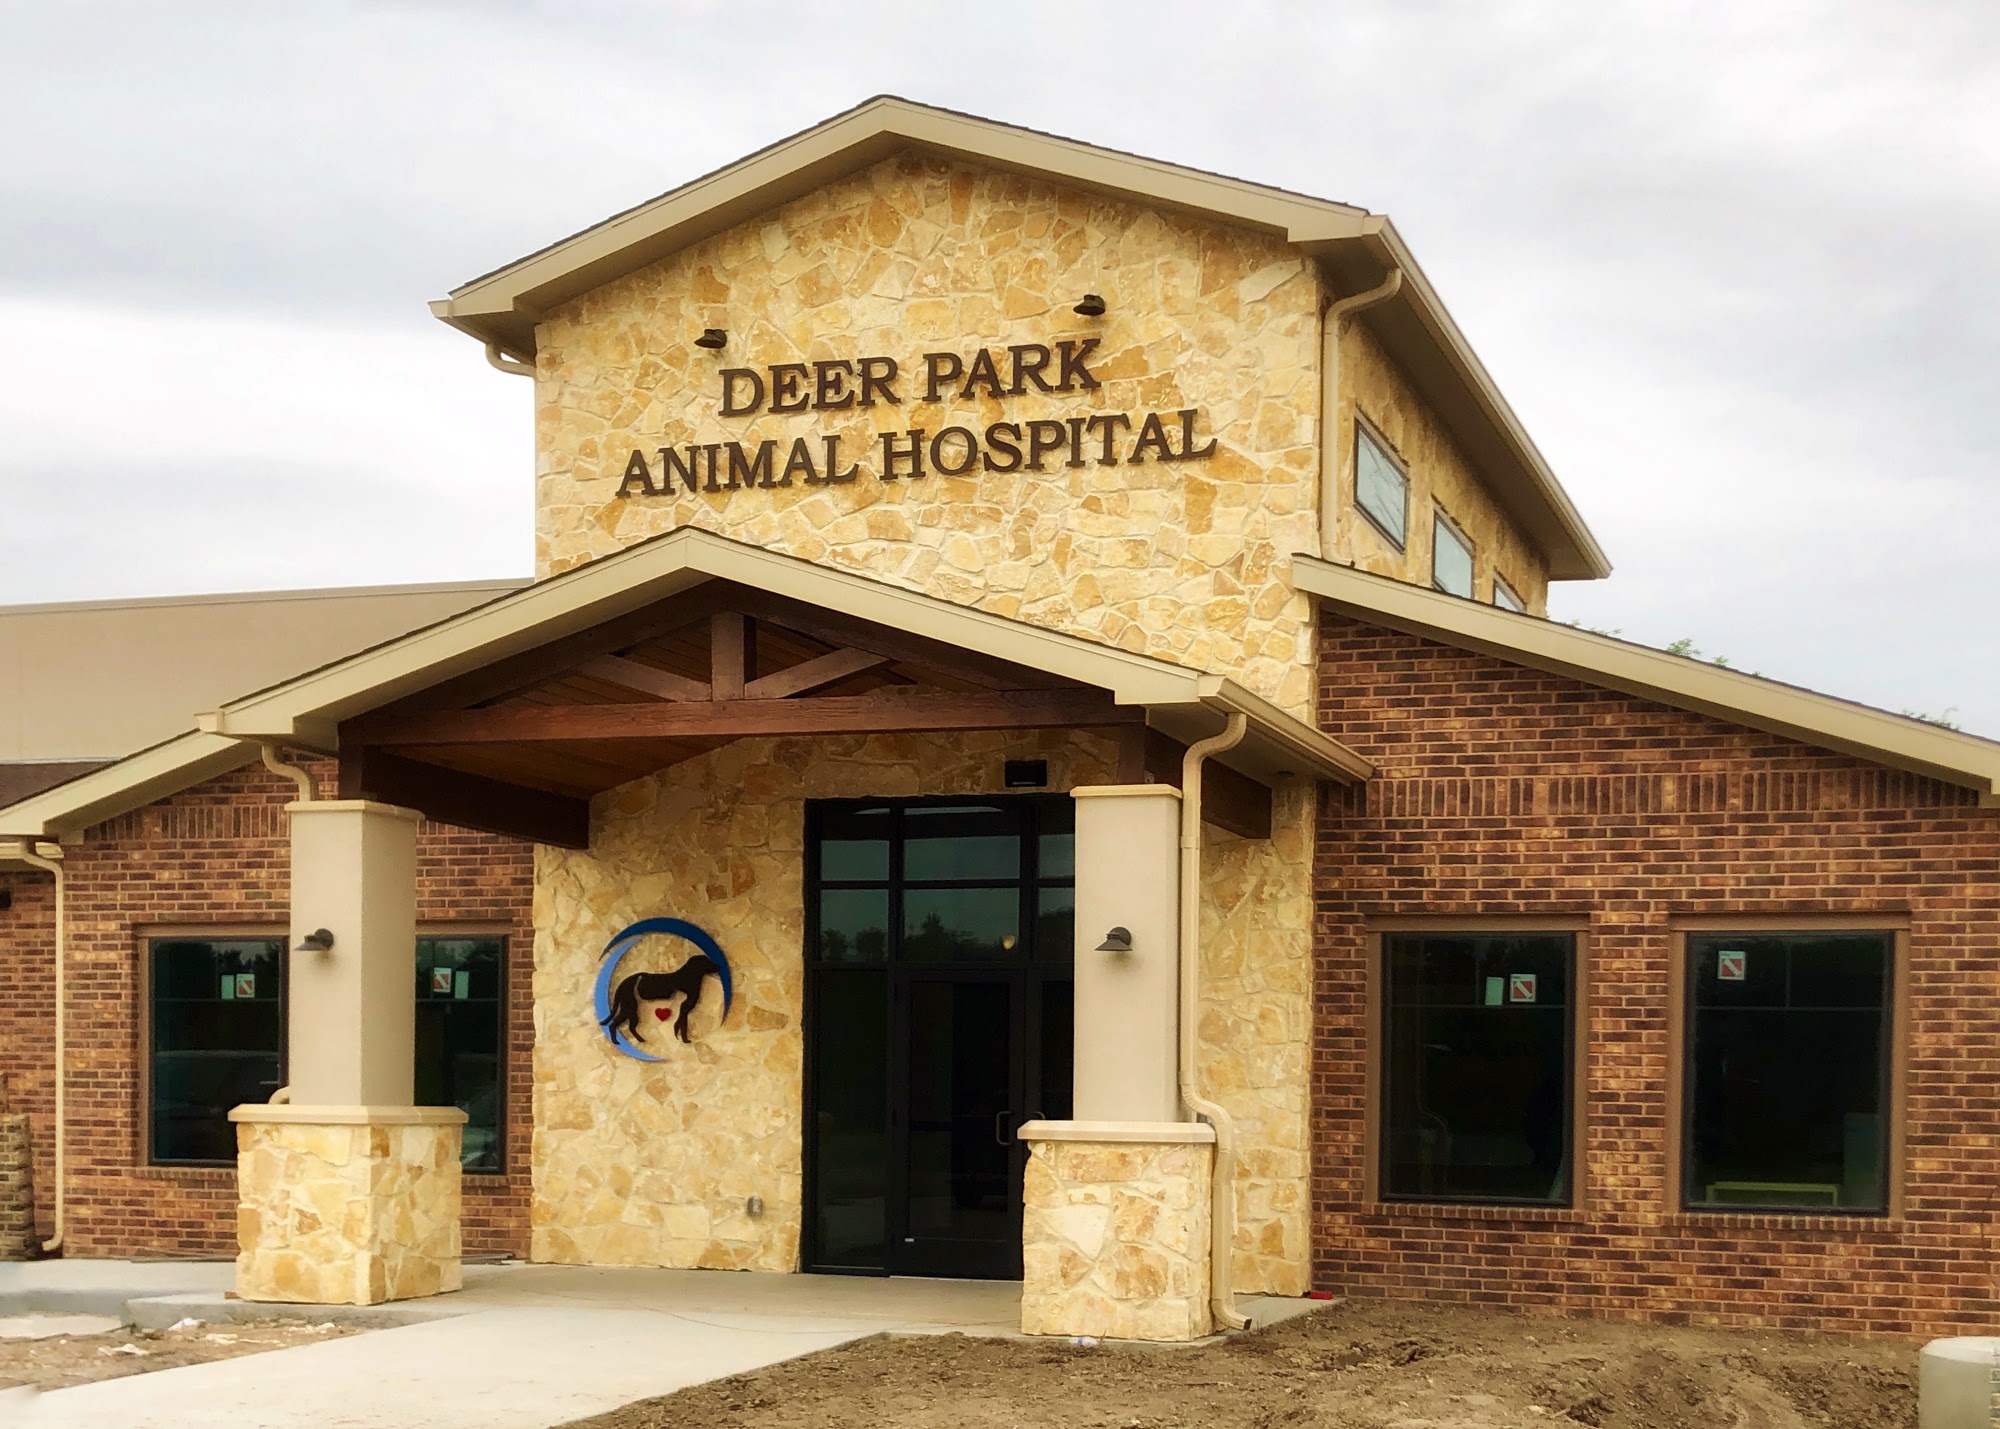 Deer Park Animal Hospital